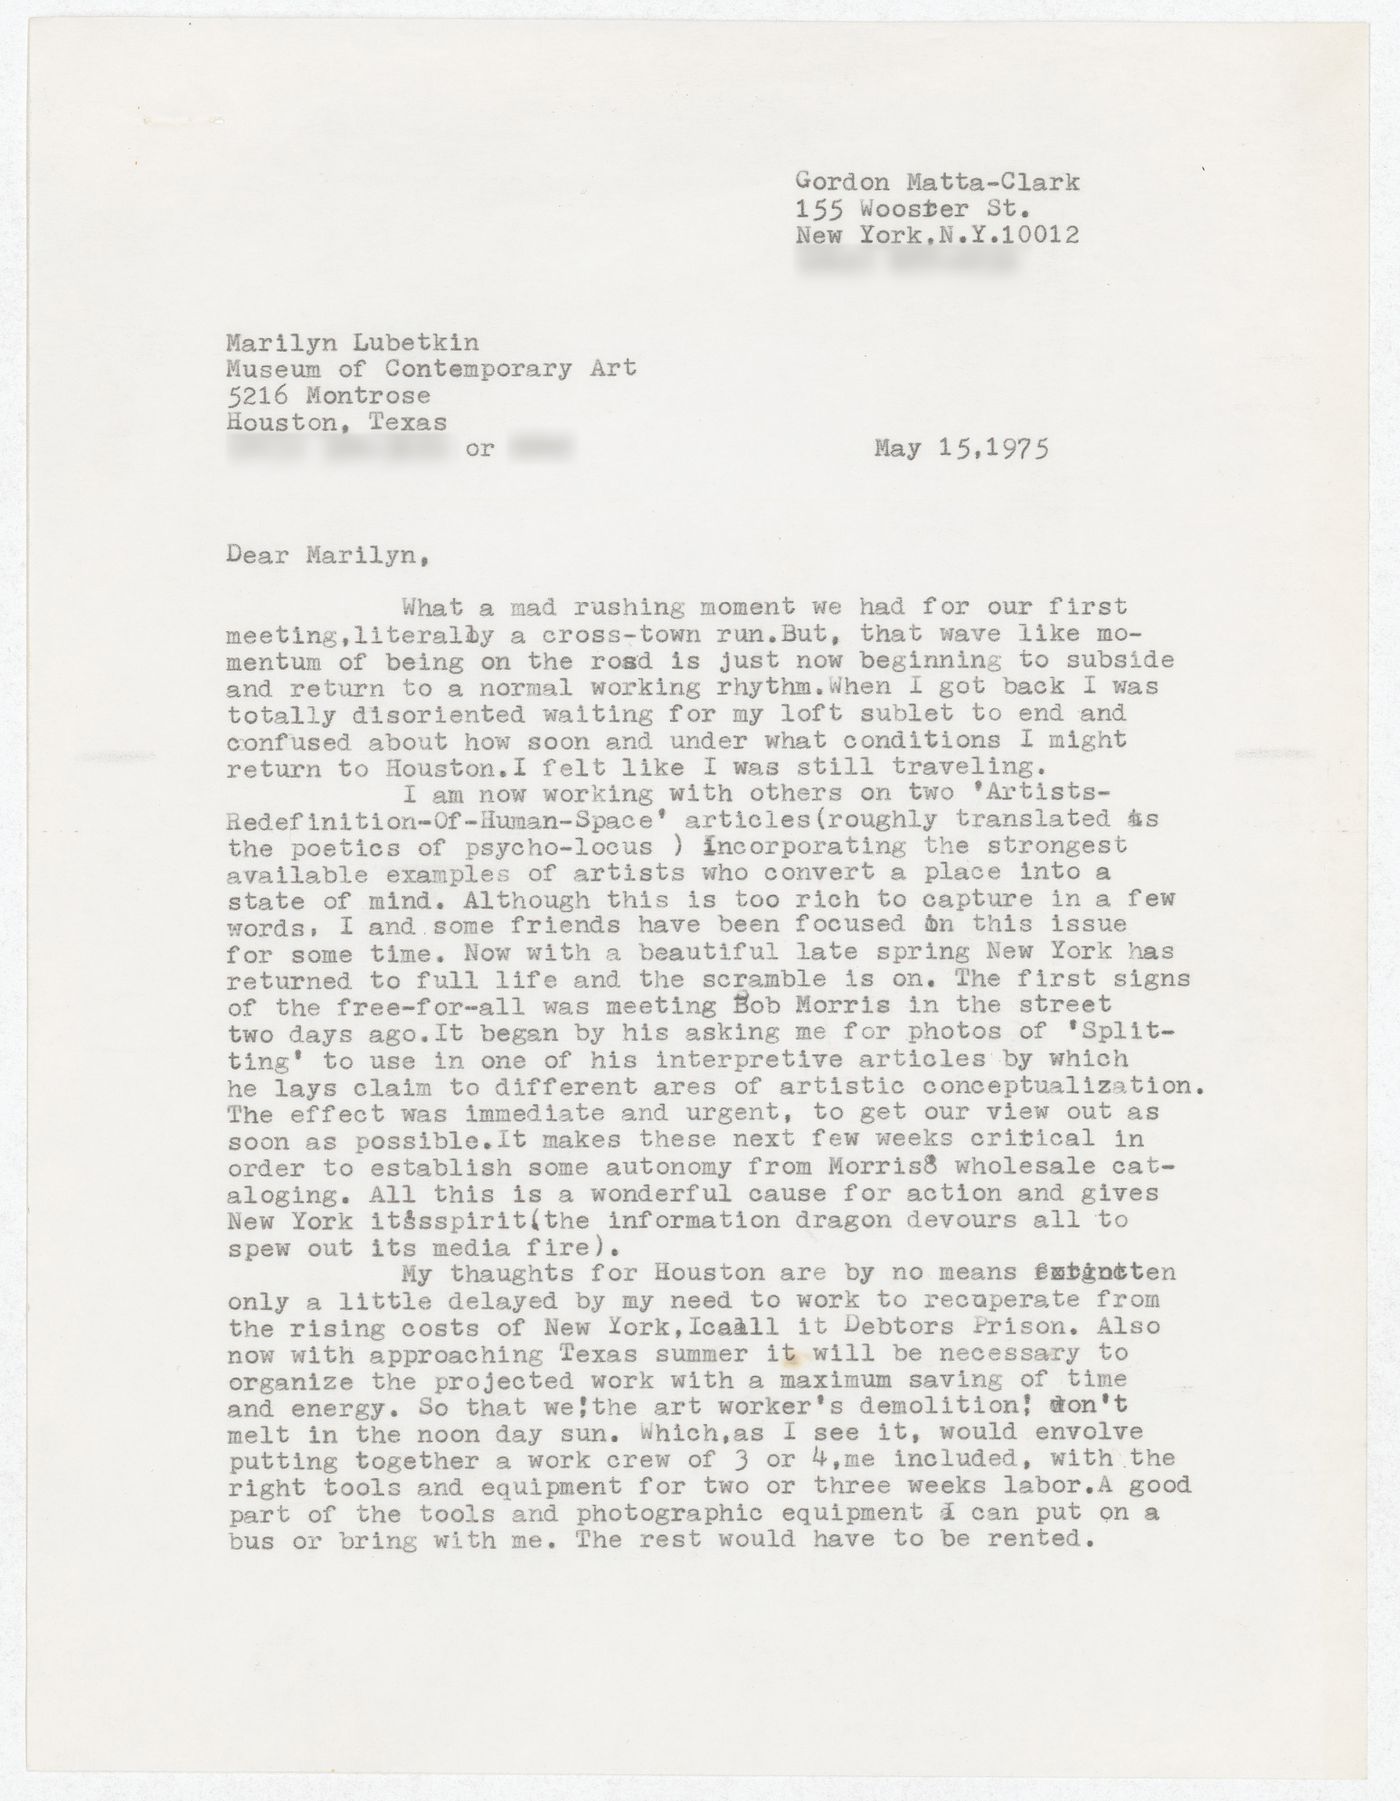 Letter from Gordon Matta-Clark to Marilyn Lubetkin